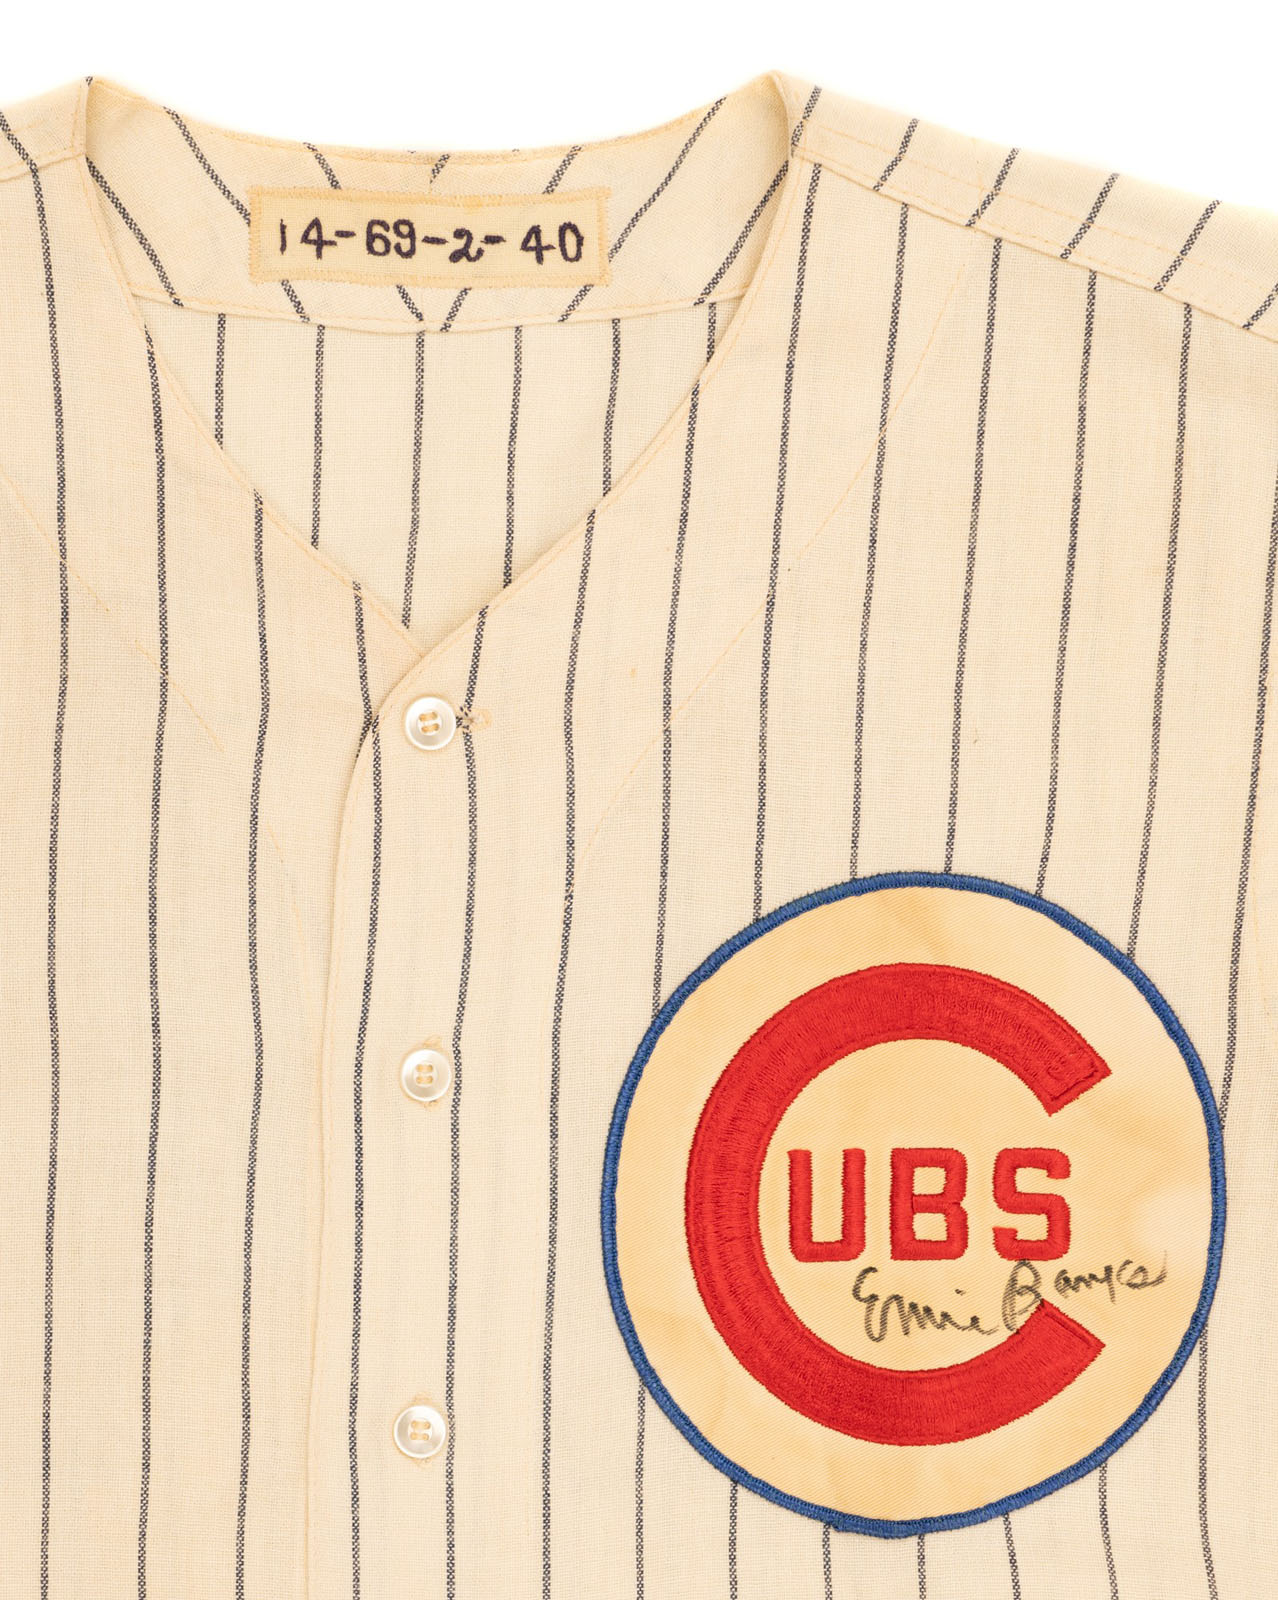 1969 cubs game worn jersey